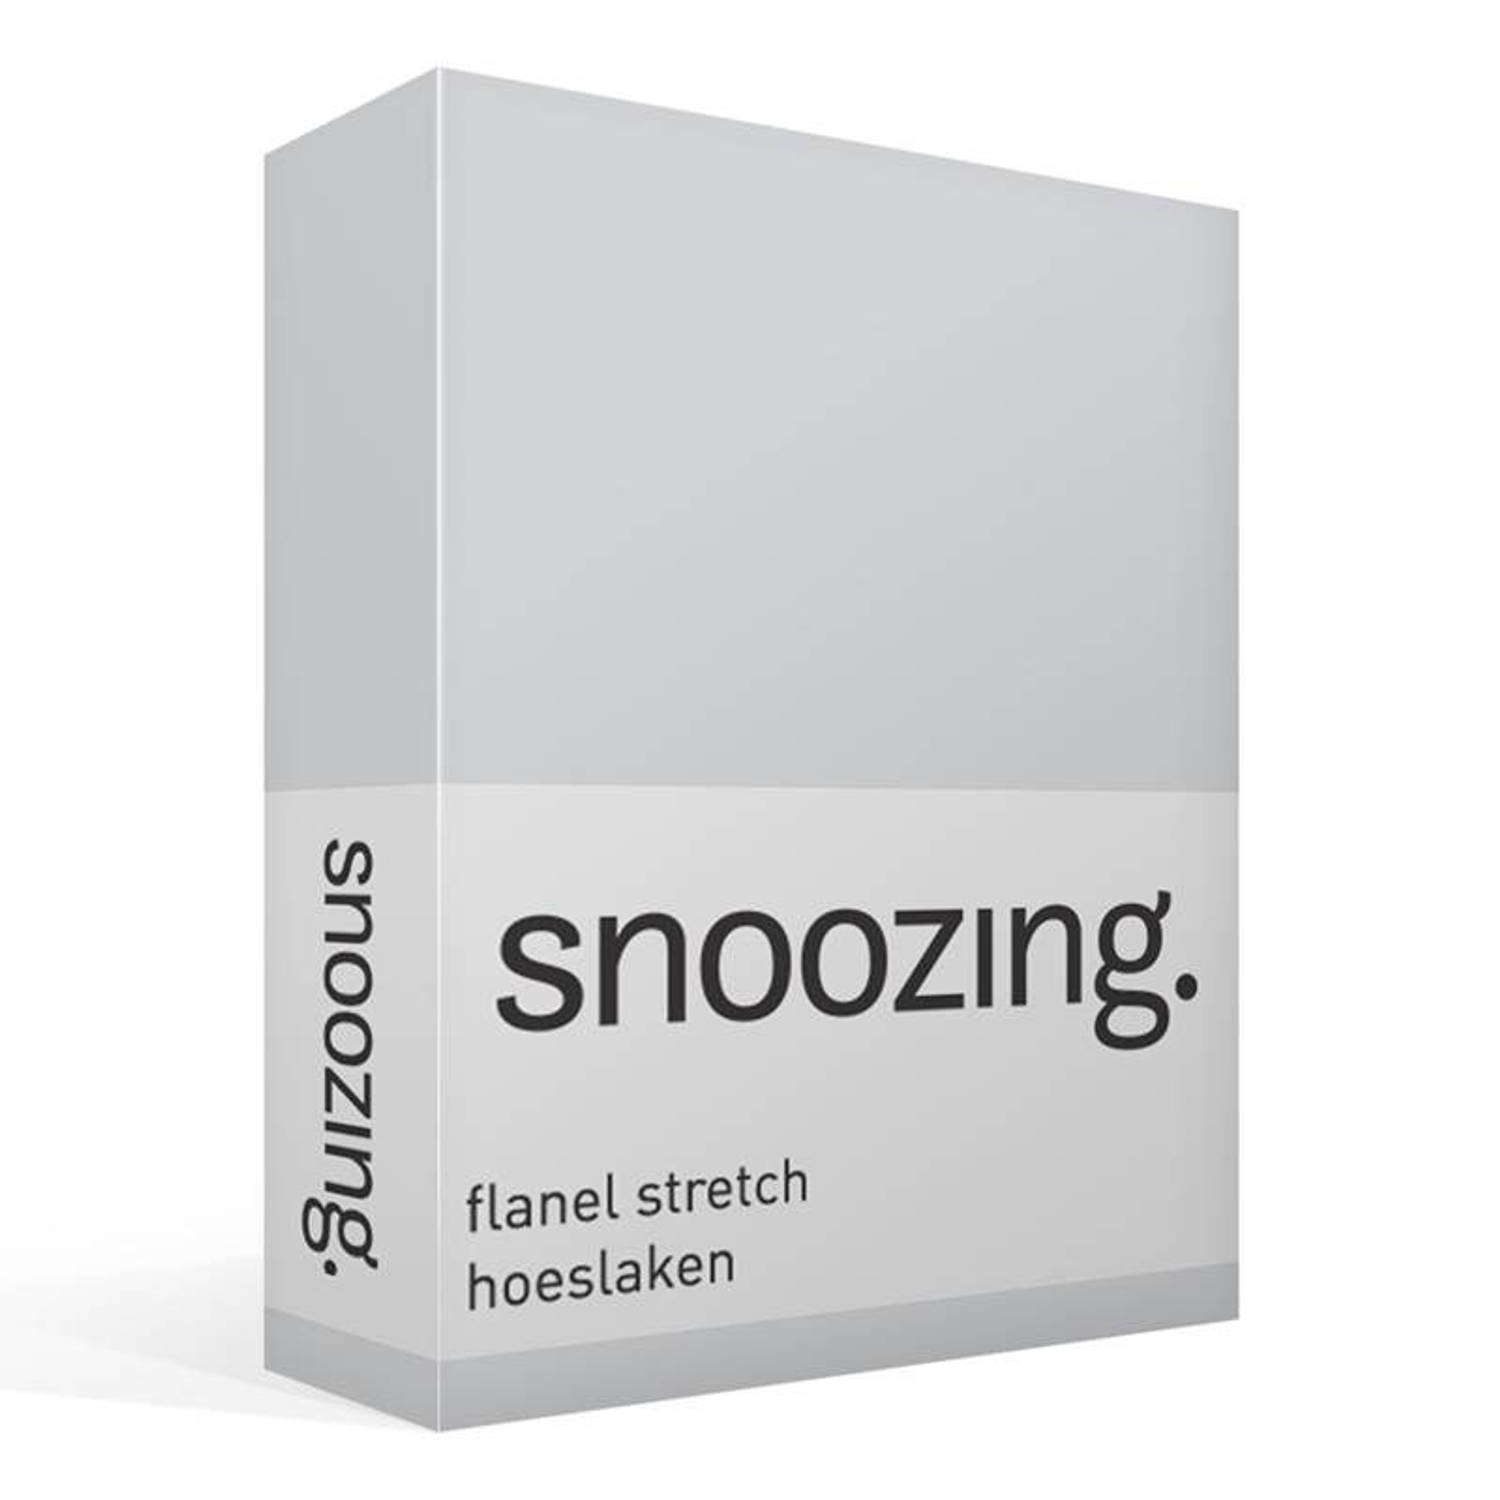 Snoozing stretch flanel hoeslaken - Tweepersoons - Grijs